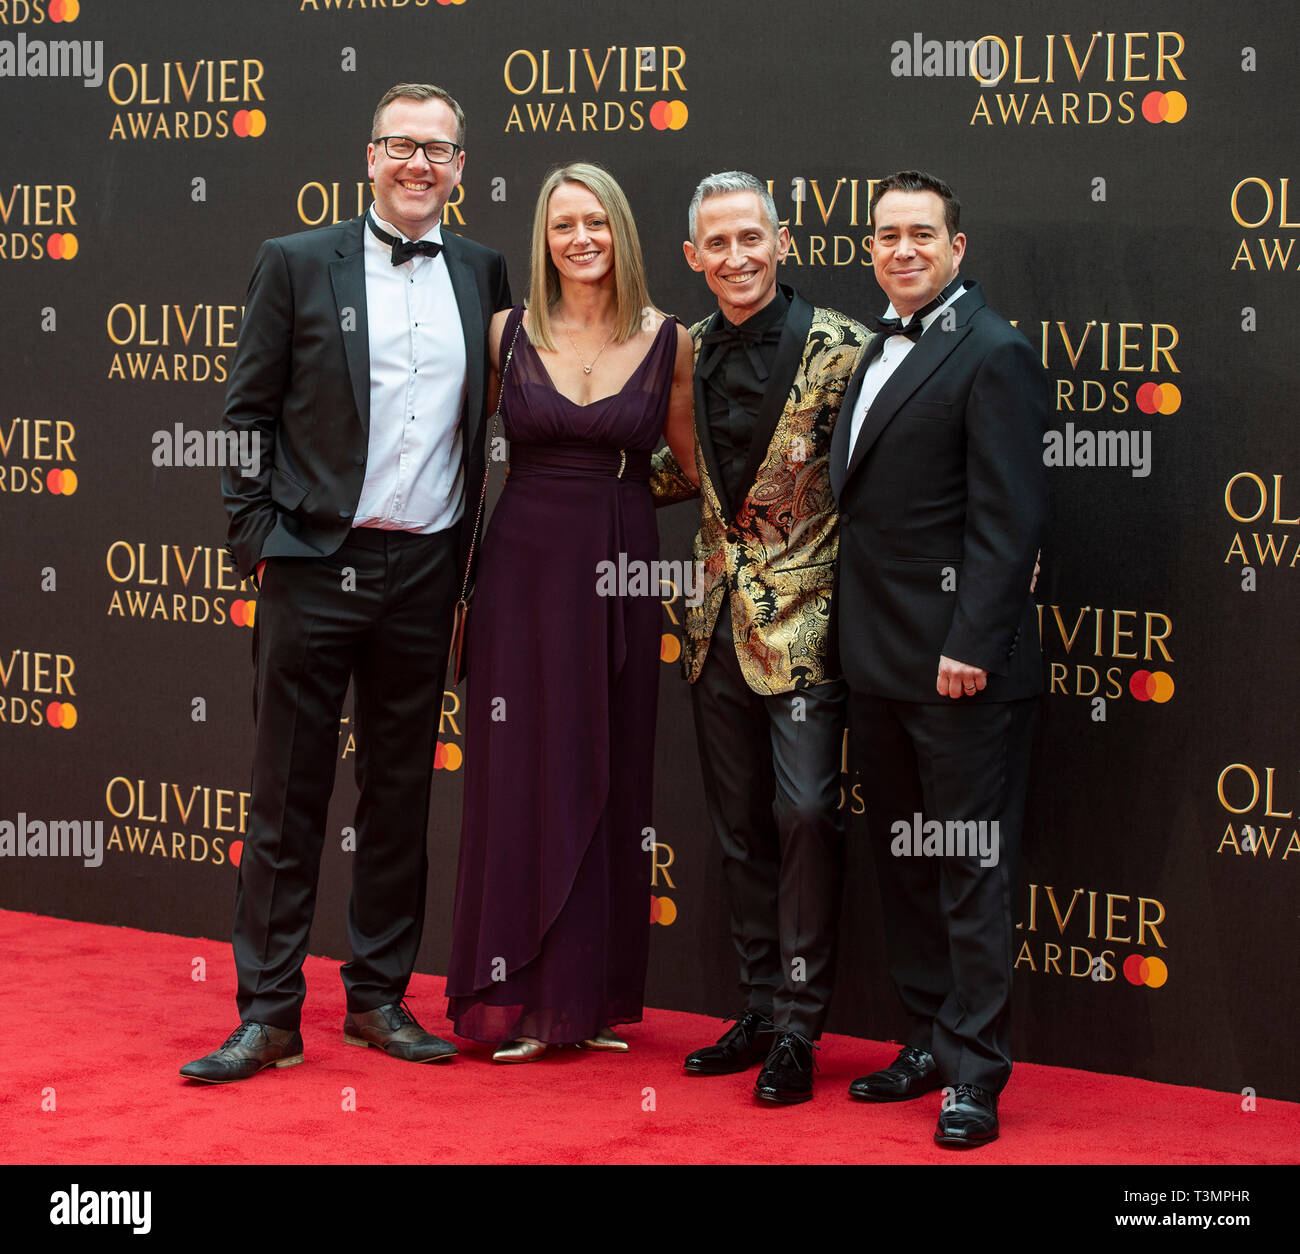 LONDON, ENGLAND - April 07: Gast besucht die Olivier Awards 2019 mit Mastercard in der Royal Albert Hall am 7. April 2019 in London, England Stockfoto